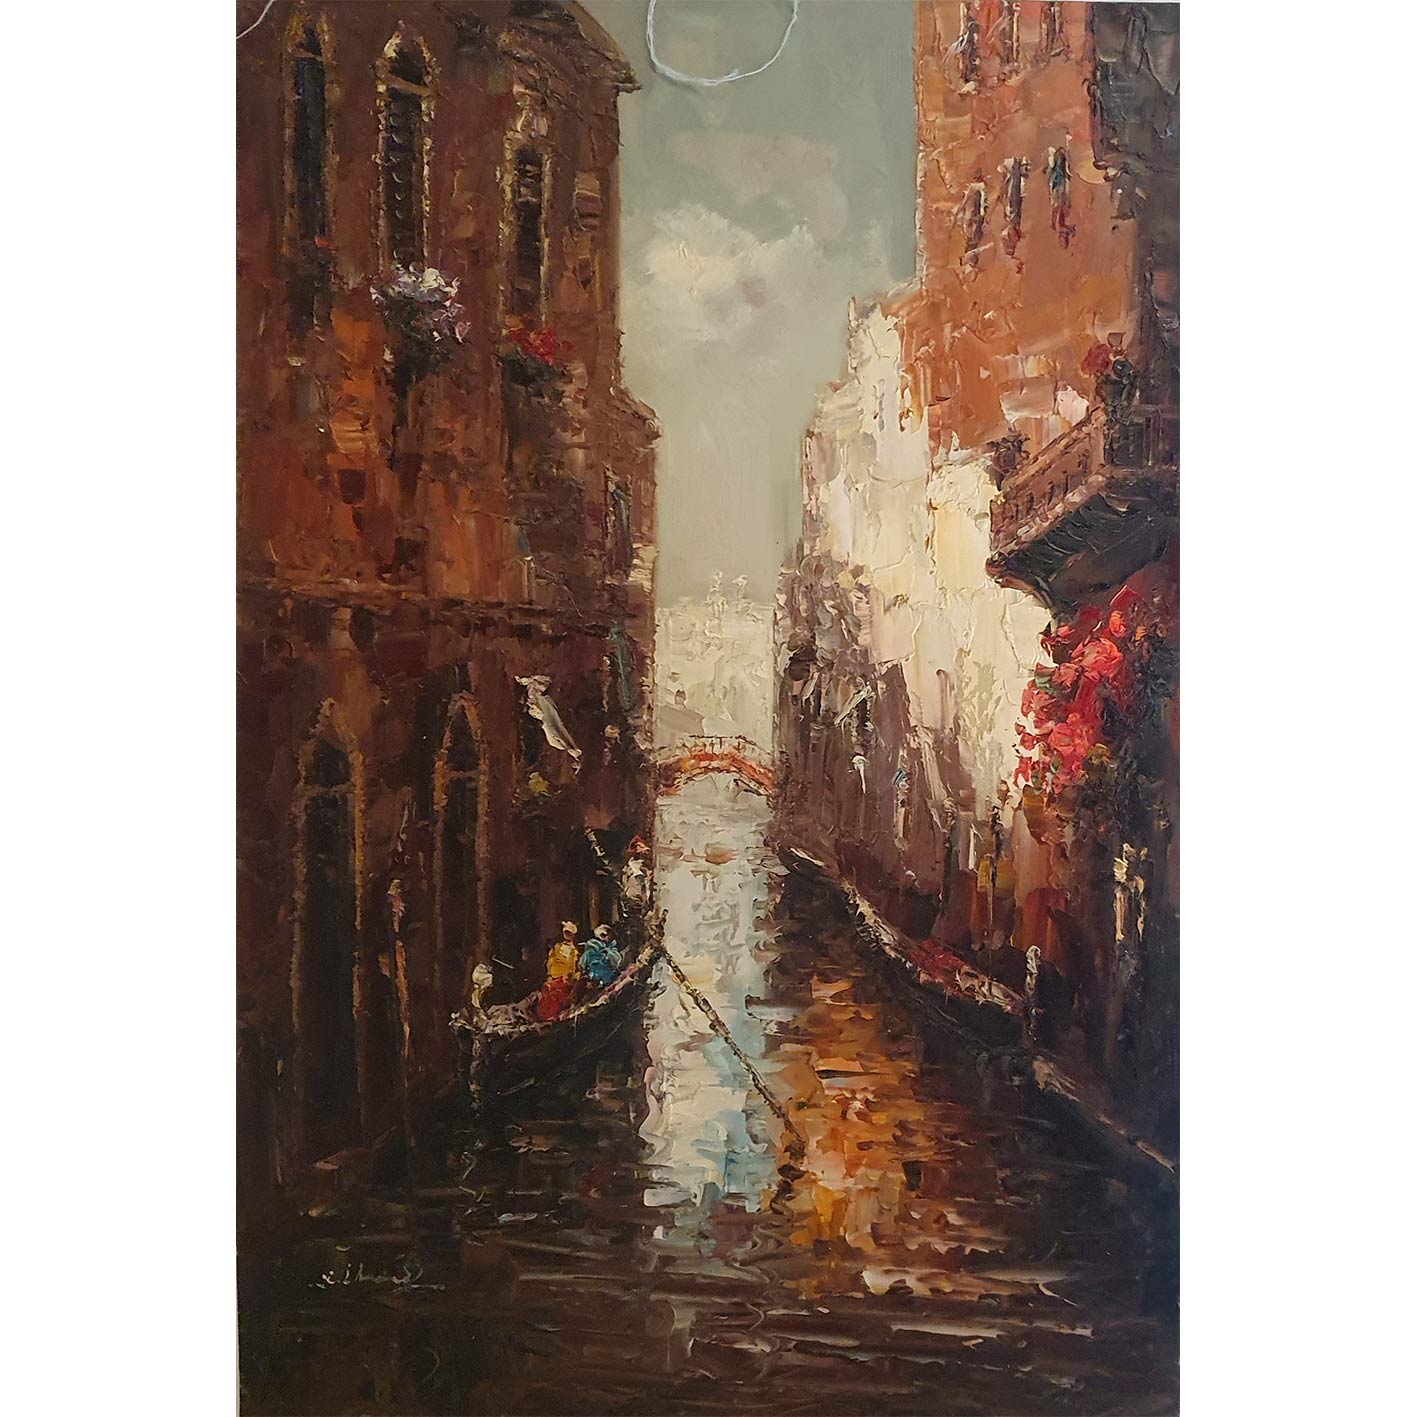 Venetian Canal painting 60x90 cm